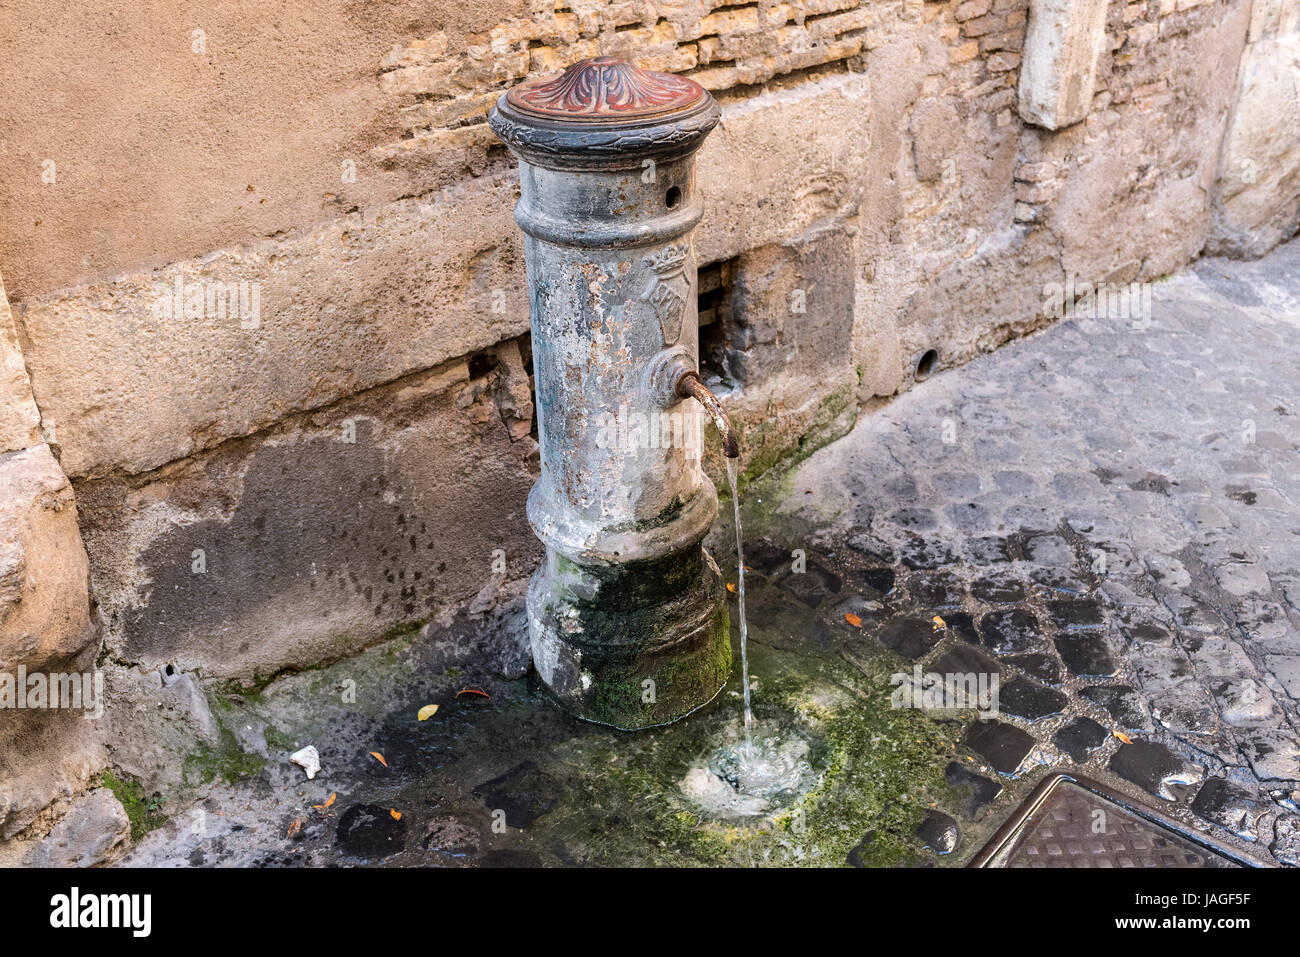 Trinkbrunnen in der gepflasterten Straße, Trastevere, Rom, Italien  Stockfotografie - Alamy